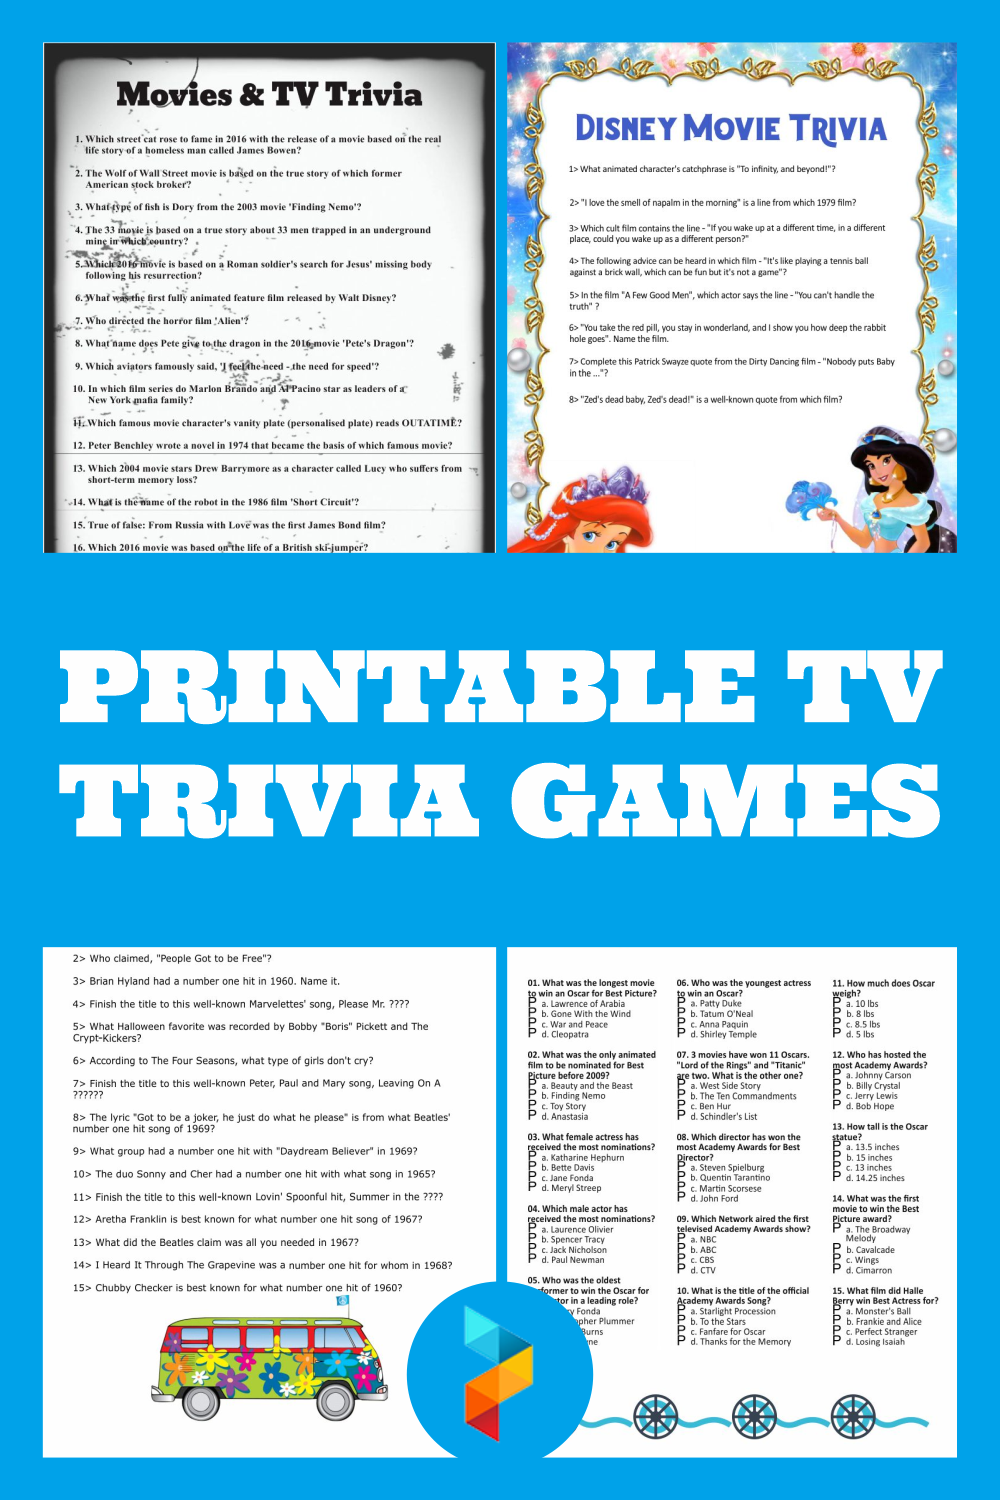 Printable TV Trivia Games